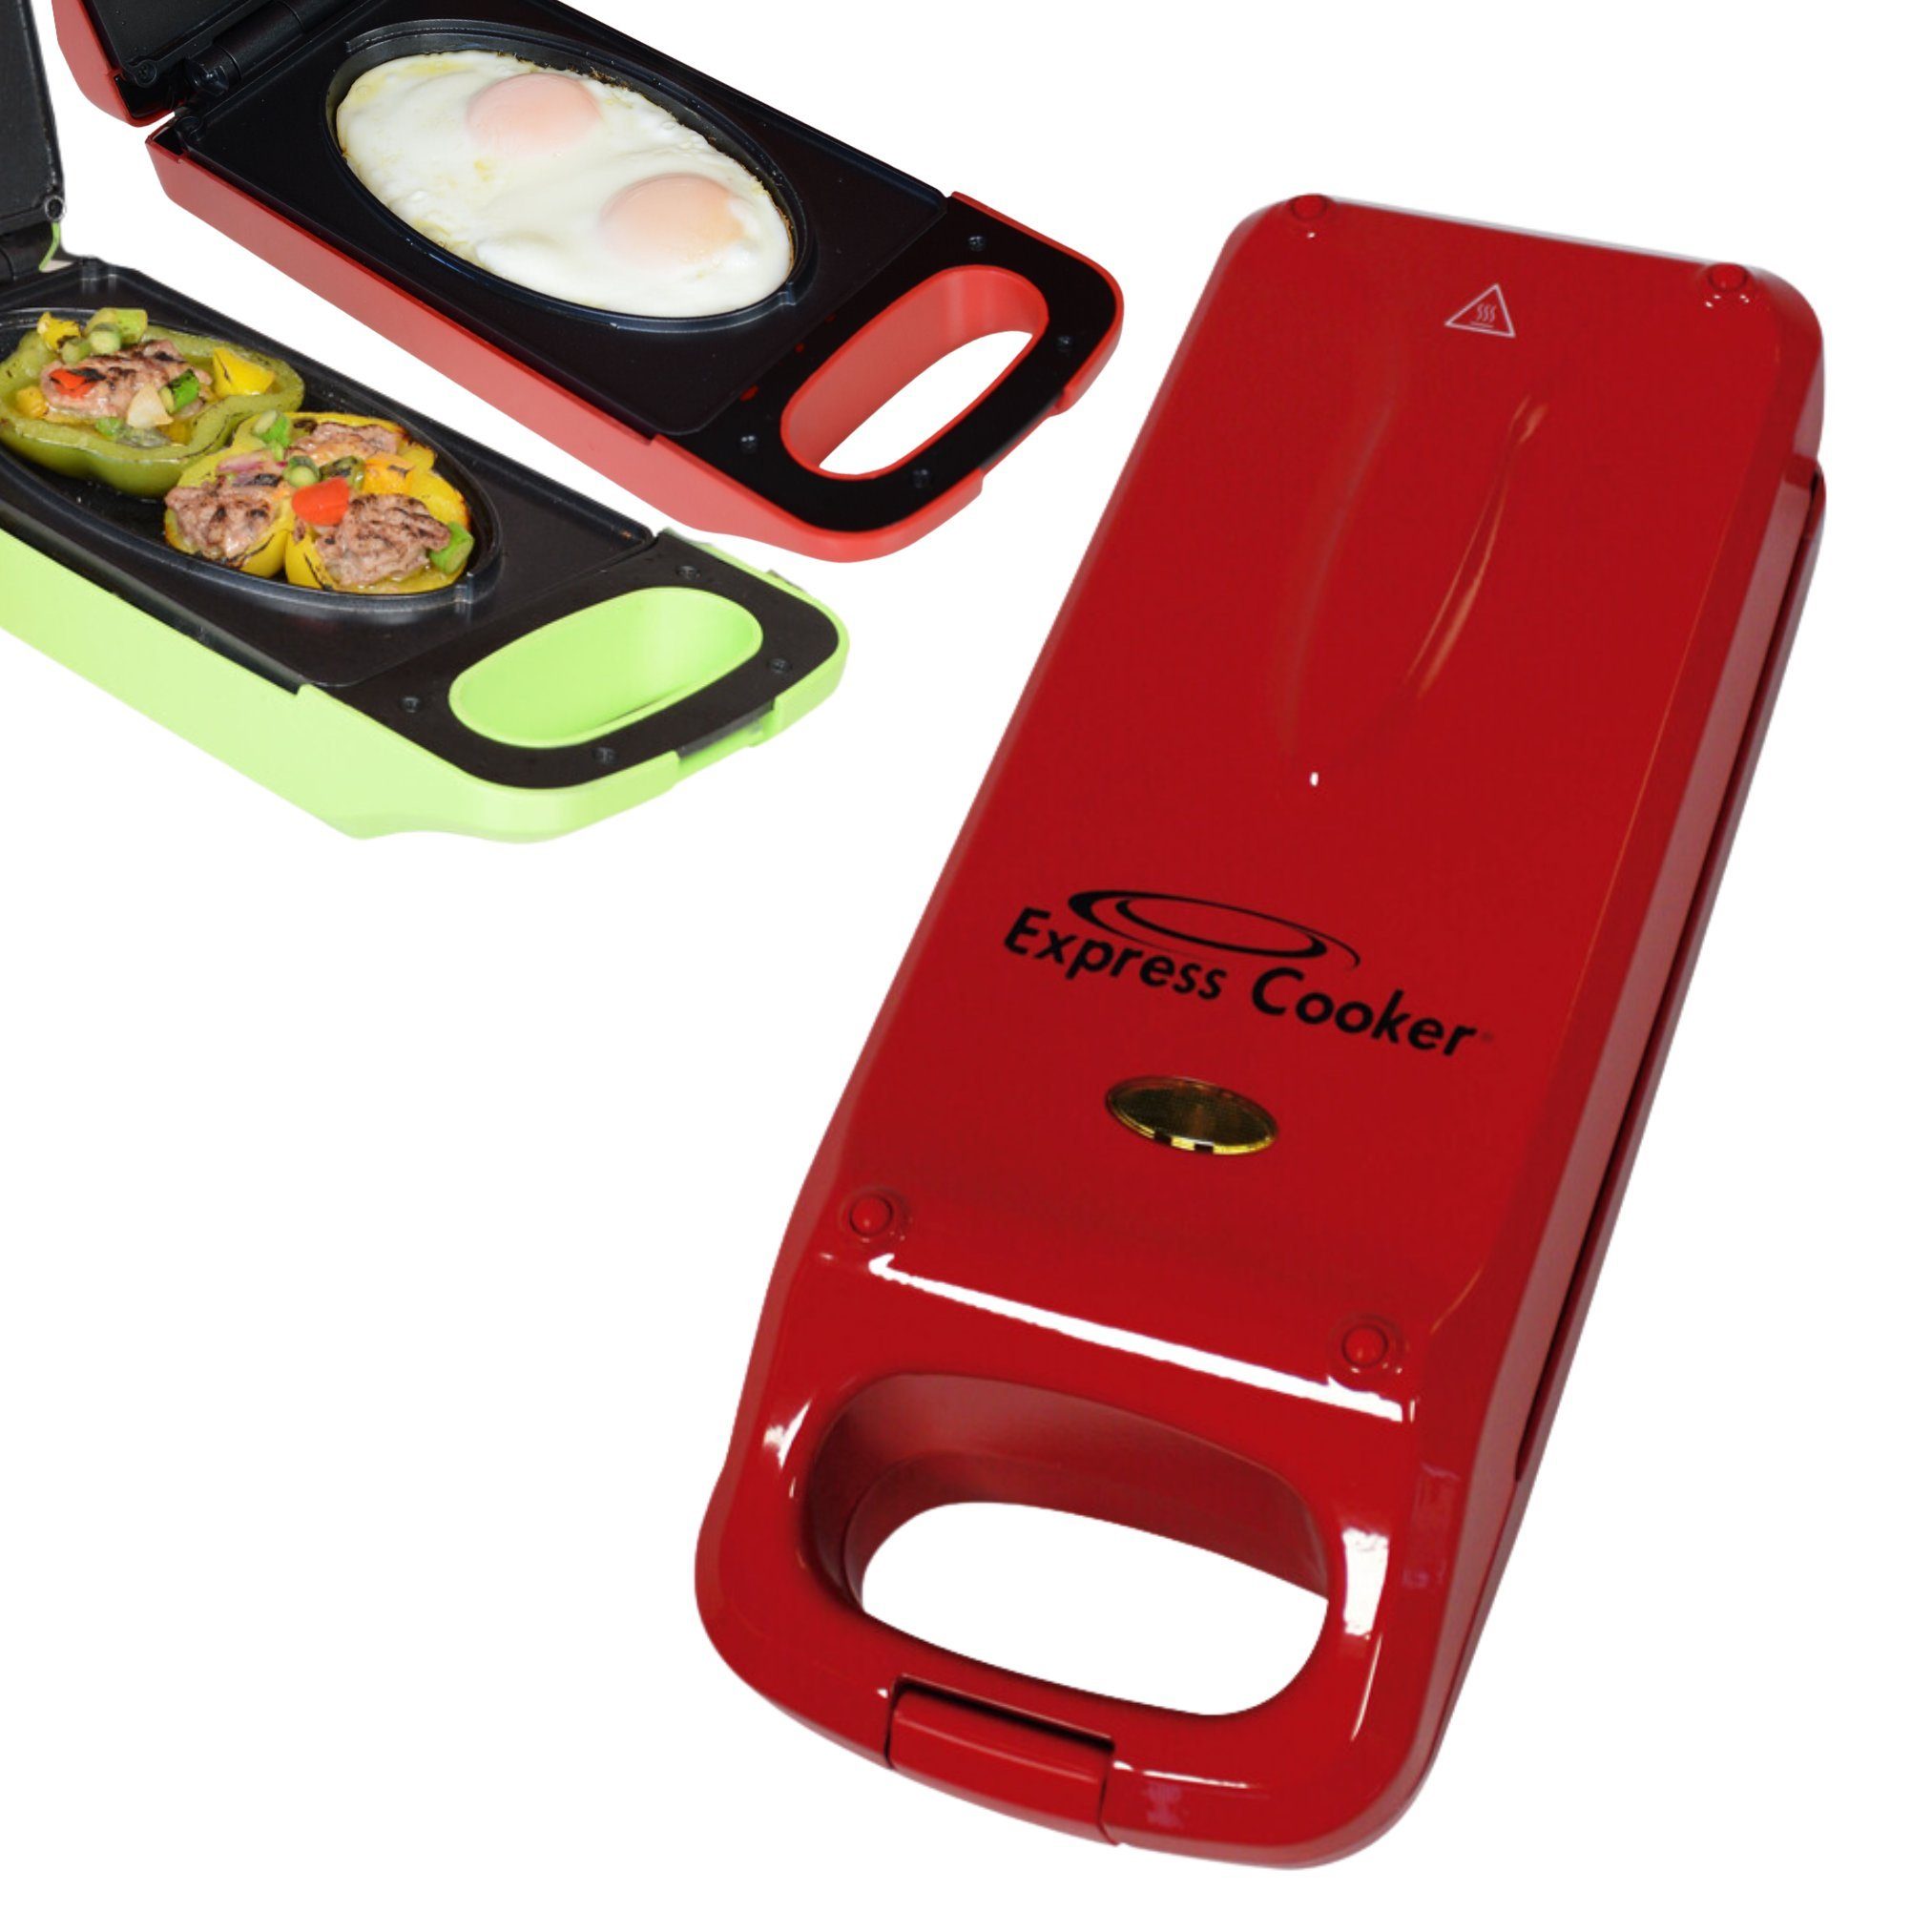 Best Direct® Kontaktgrill Express Cooker®, 800 W, Antihaft-Oberfläche, Ober-Unterhitze, 3in1 - Toasten, Backen, Grillen rot